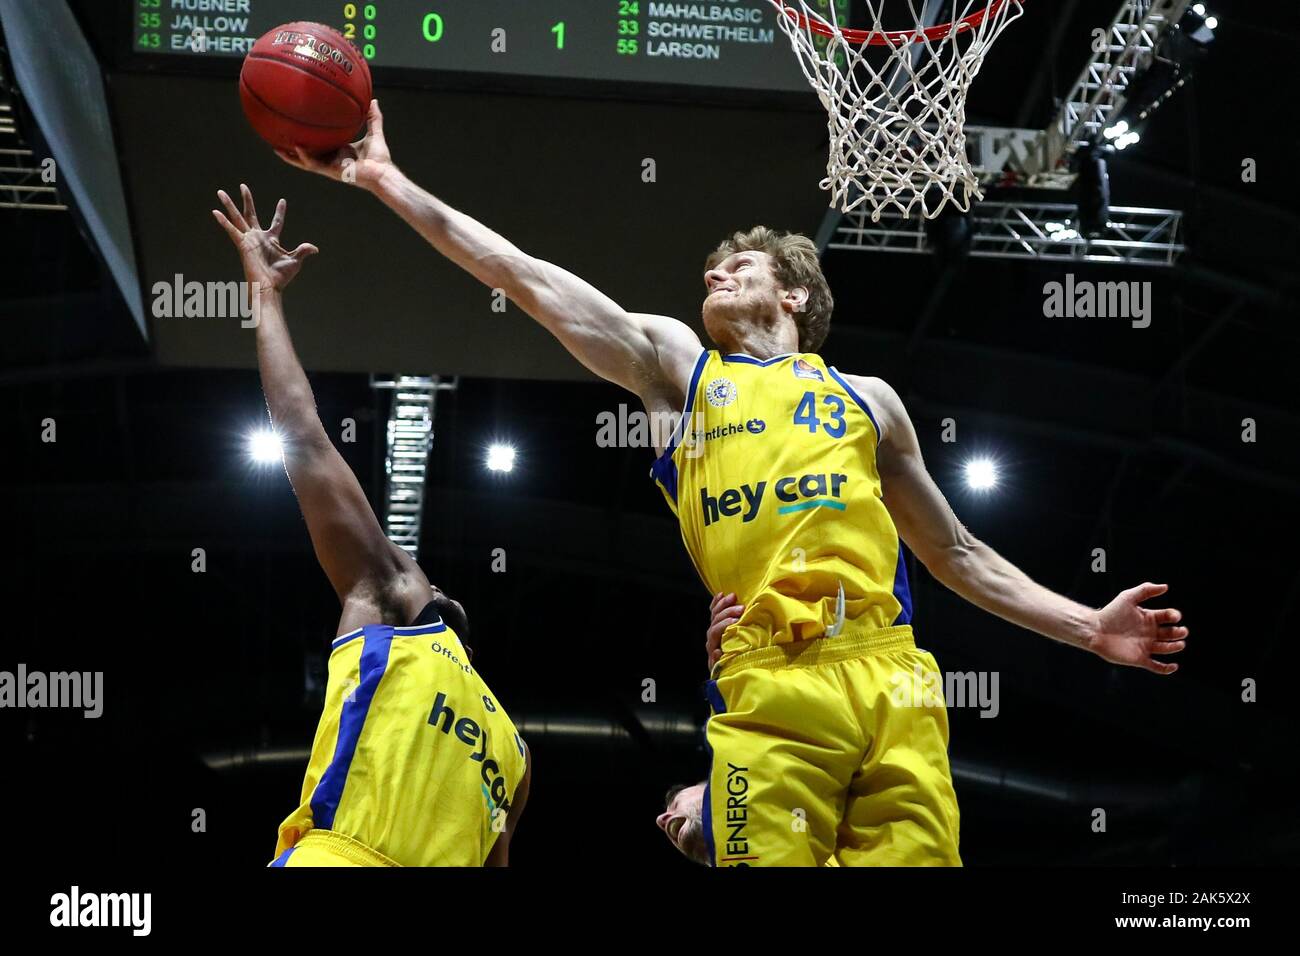 Braunschweig, Germania, 30 Dicembre 2019: Scott Eatherton di Lowen Braunschweig in azione durante la BBL Basket Bundesliga corrispondono Foto Stock